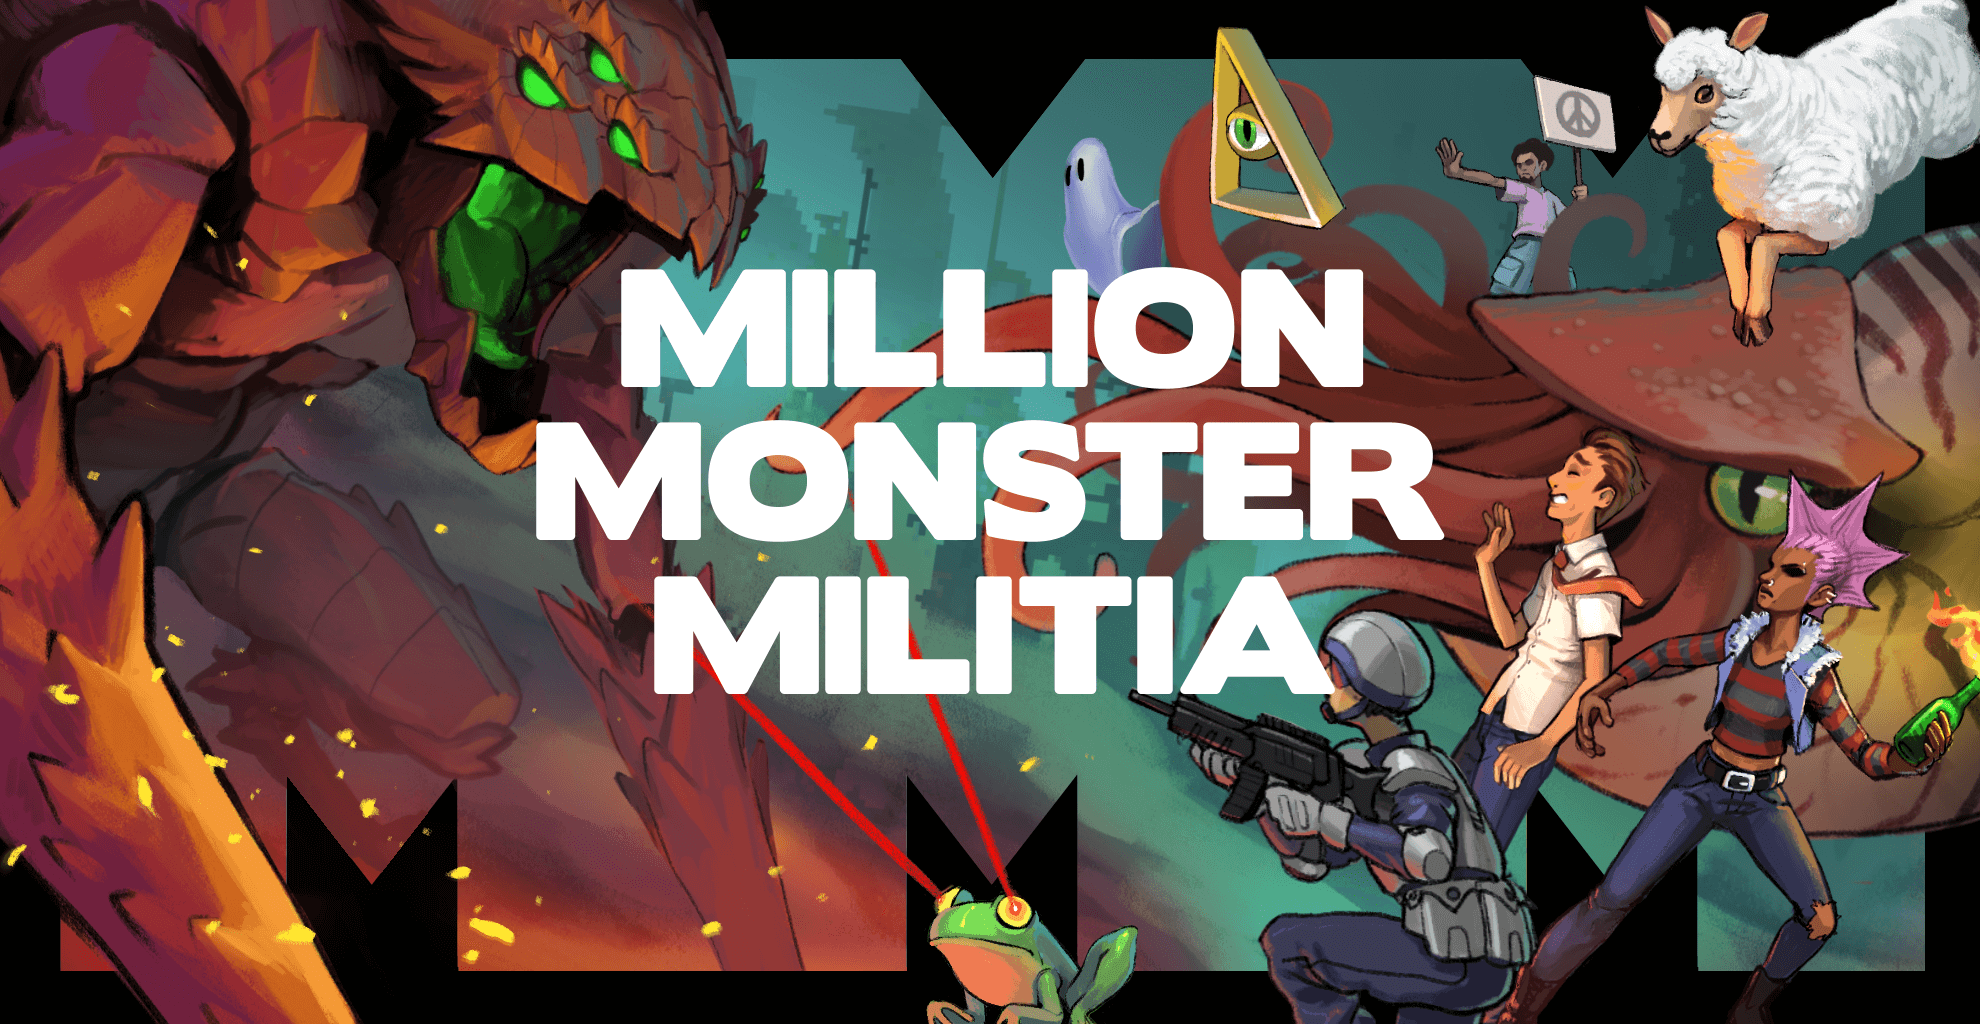 Million Monster Militia Roguelite